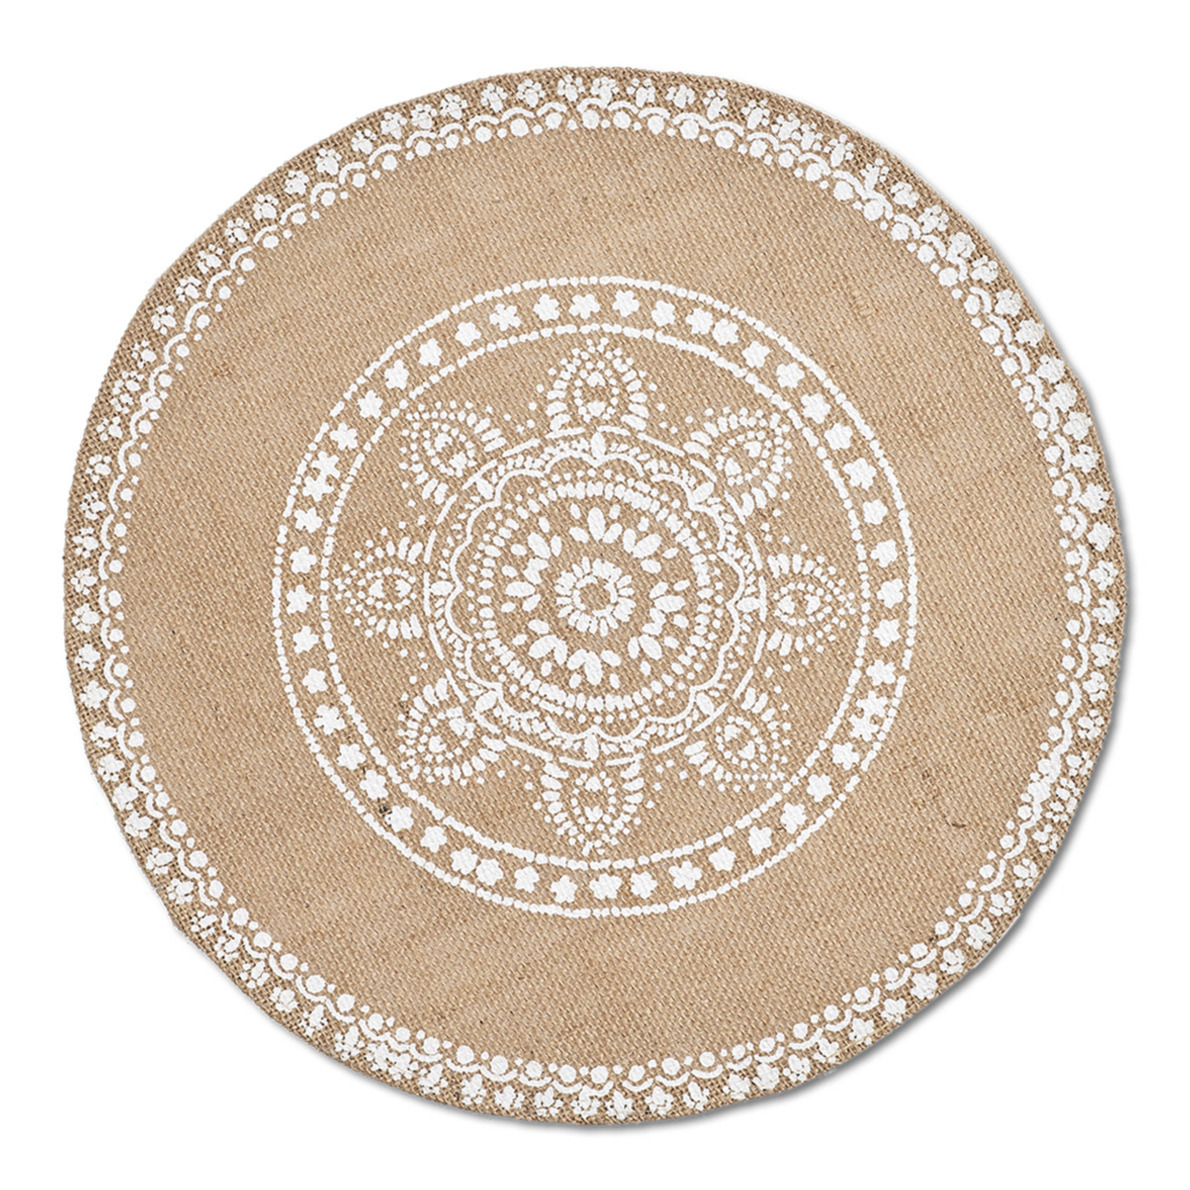 1x placemats met mandala print jute look stof rond D38 cm